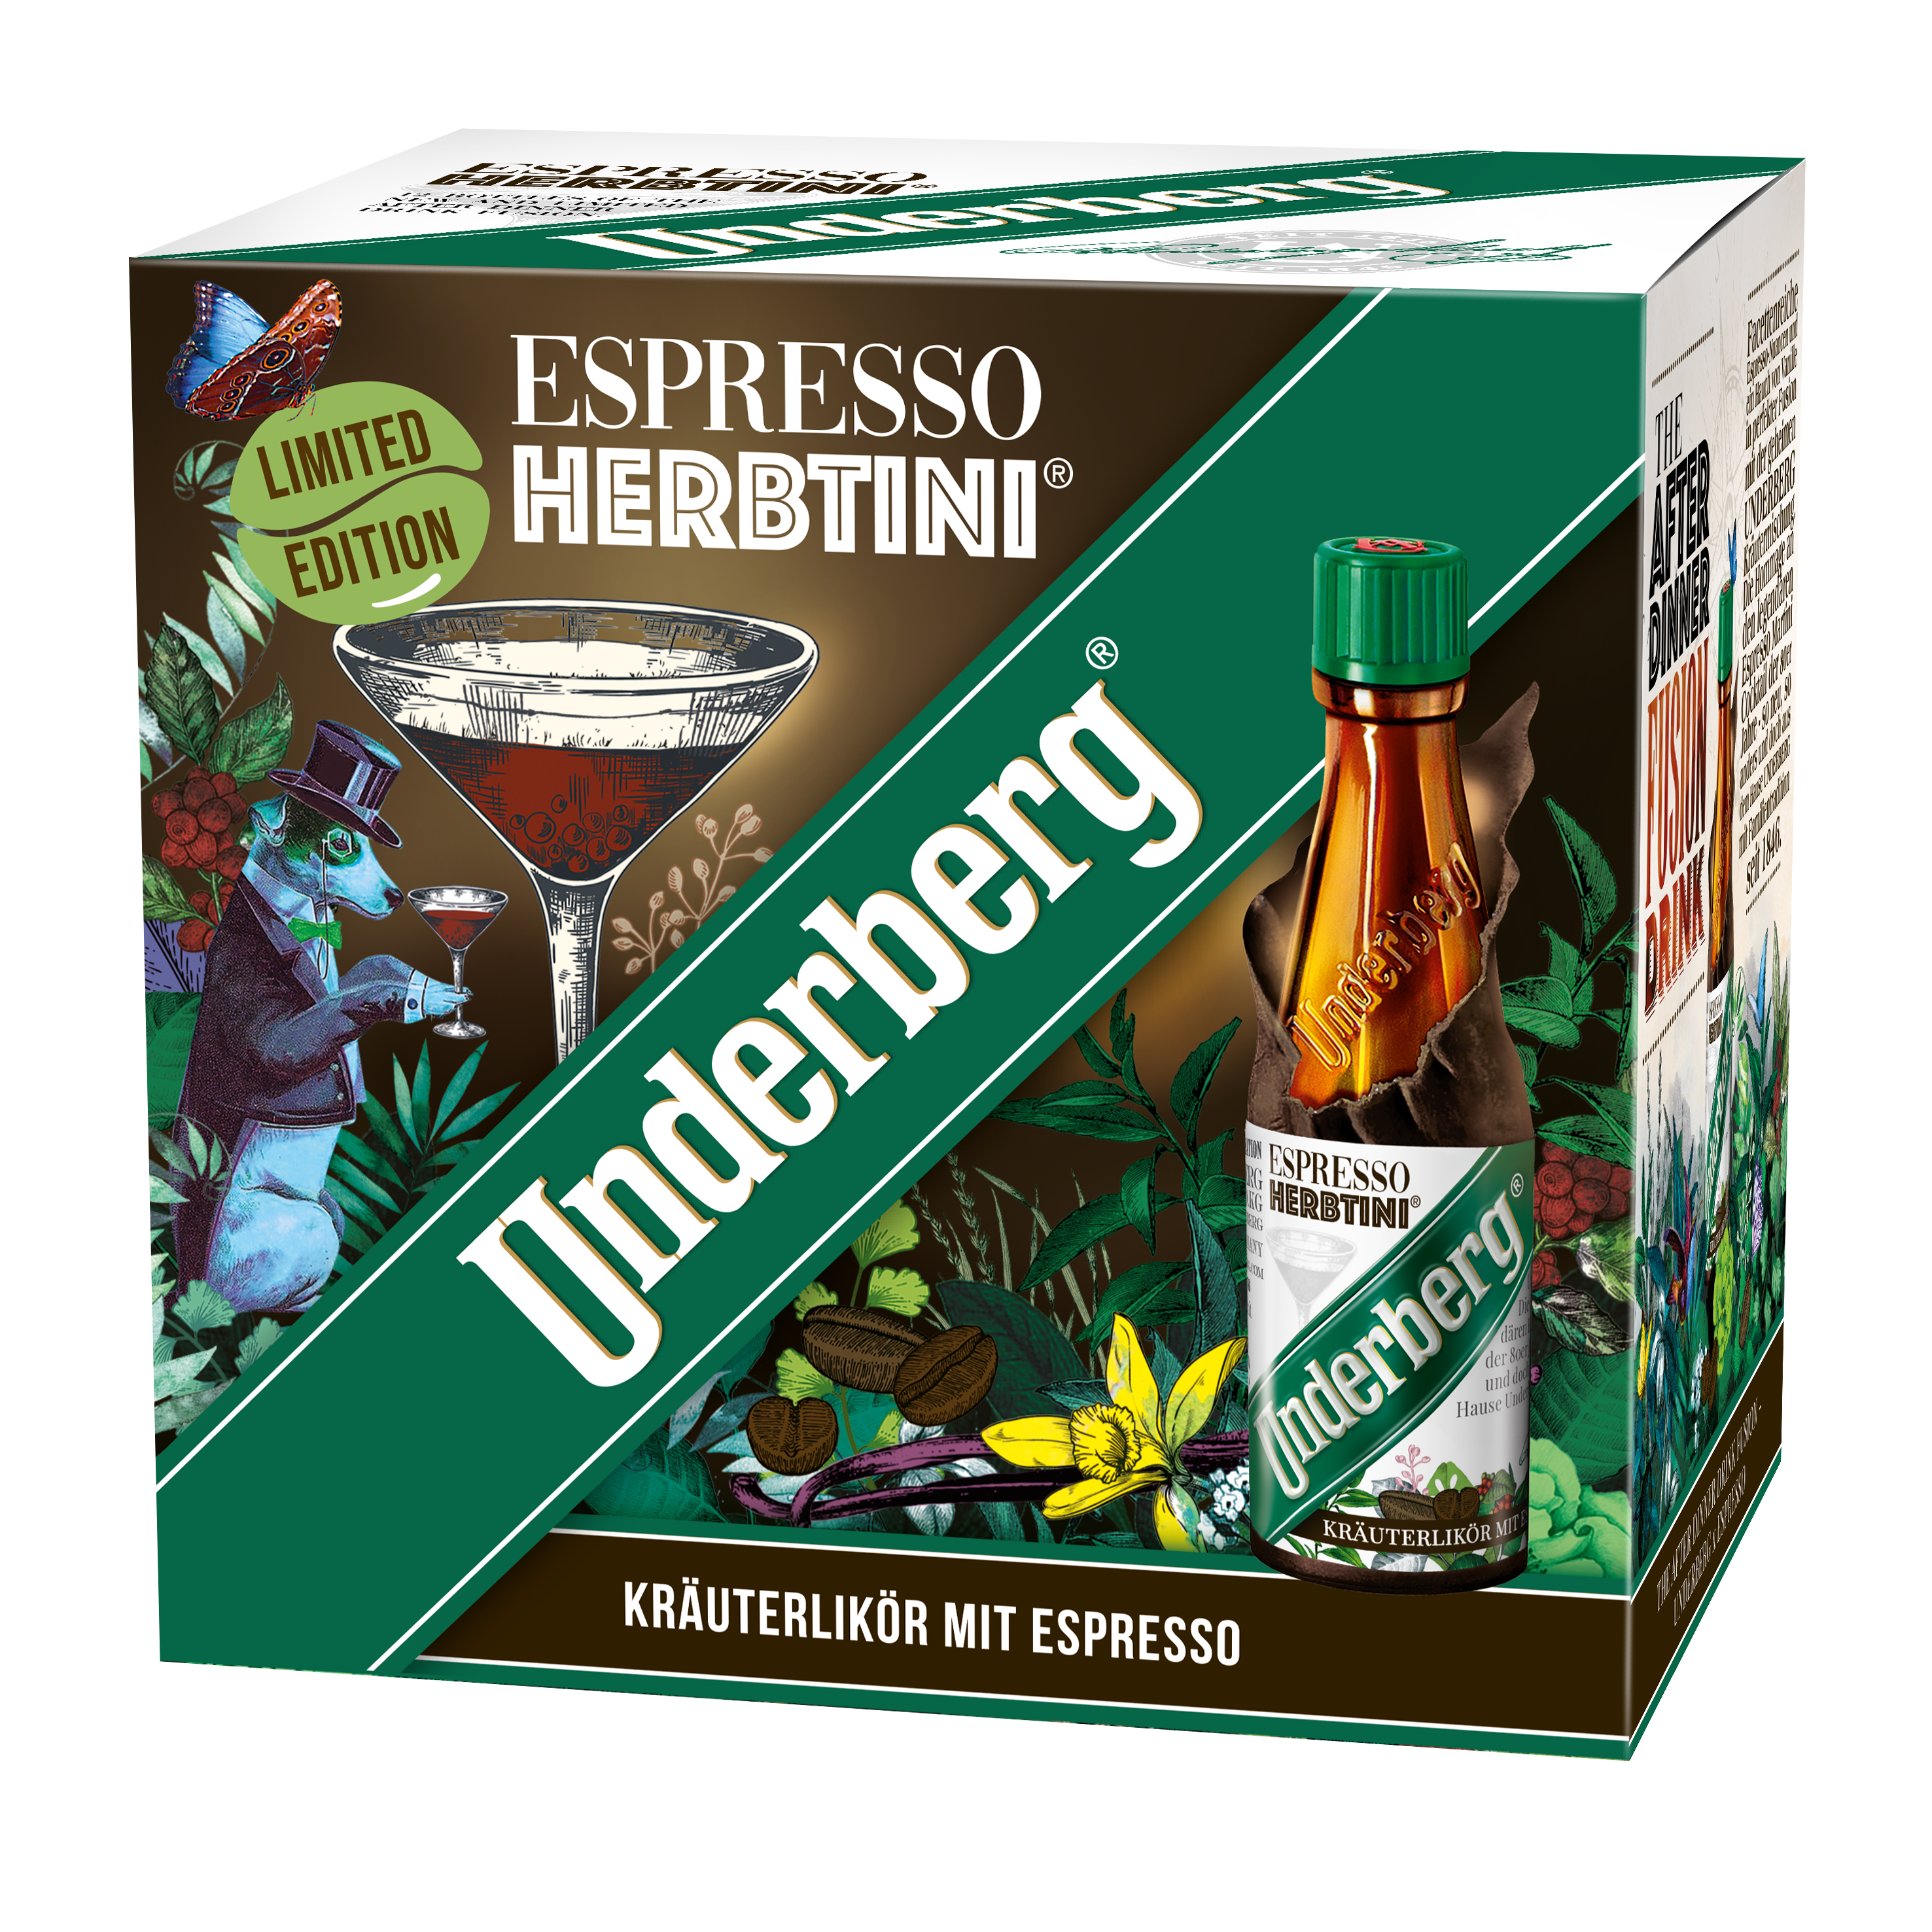 Underberg Espresso Herbtini (Limited Edition)